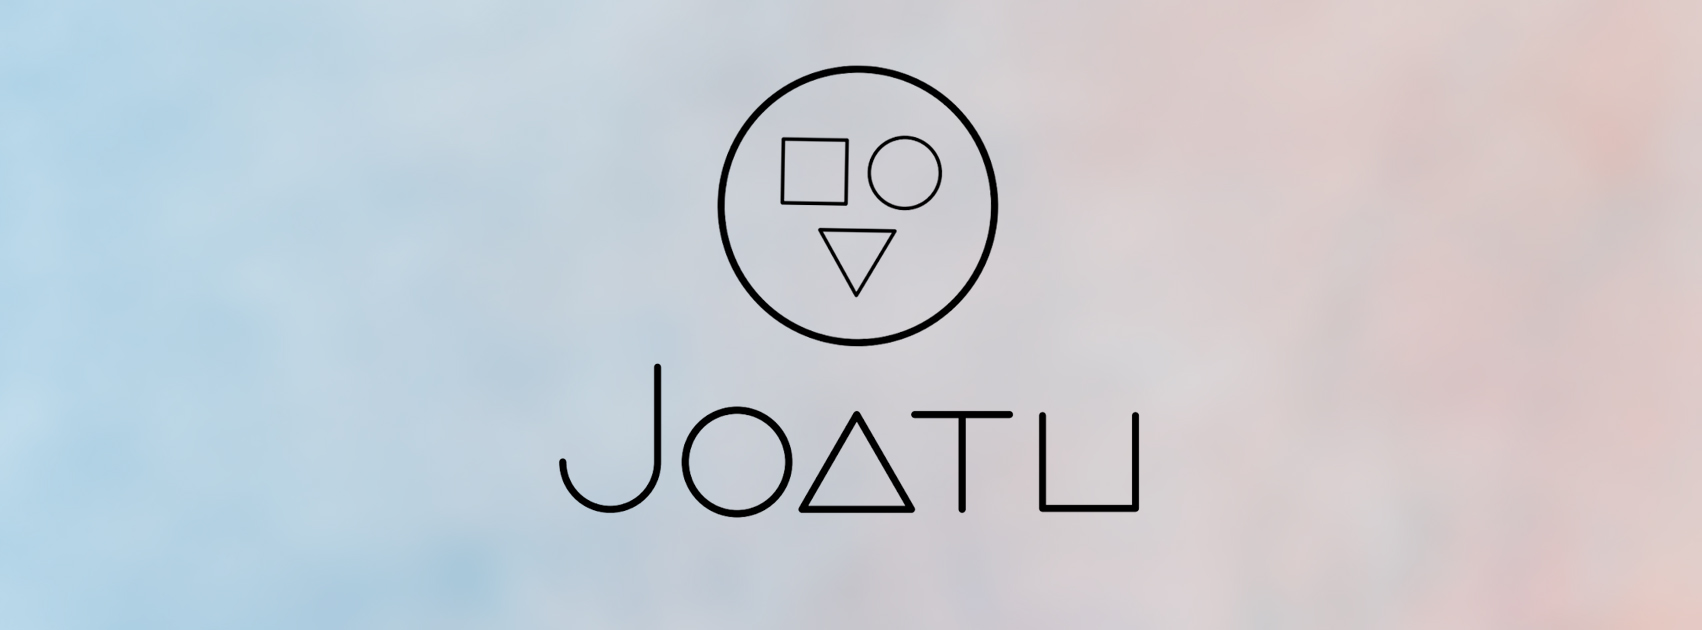 Joatu with code(love)